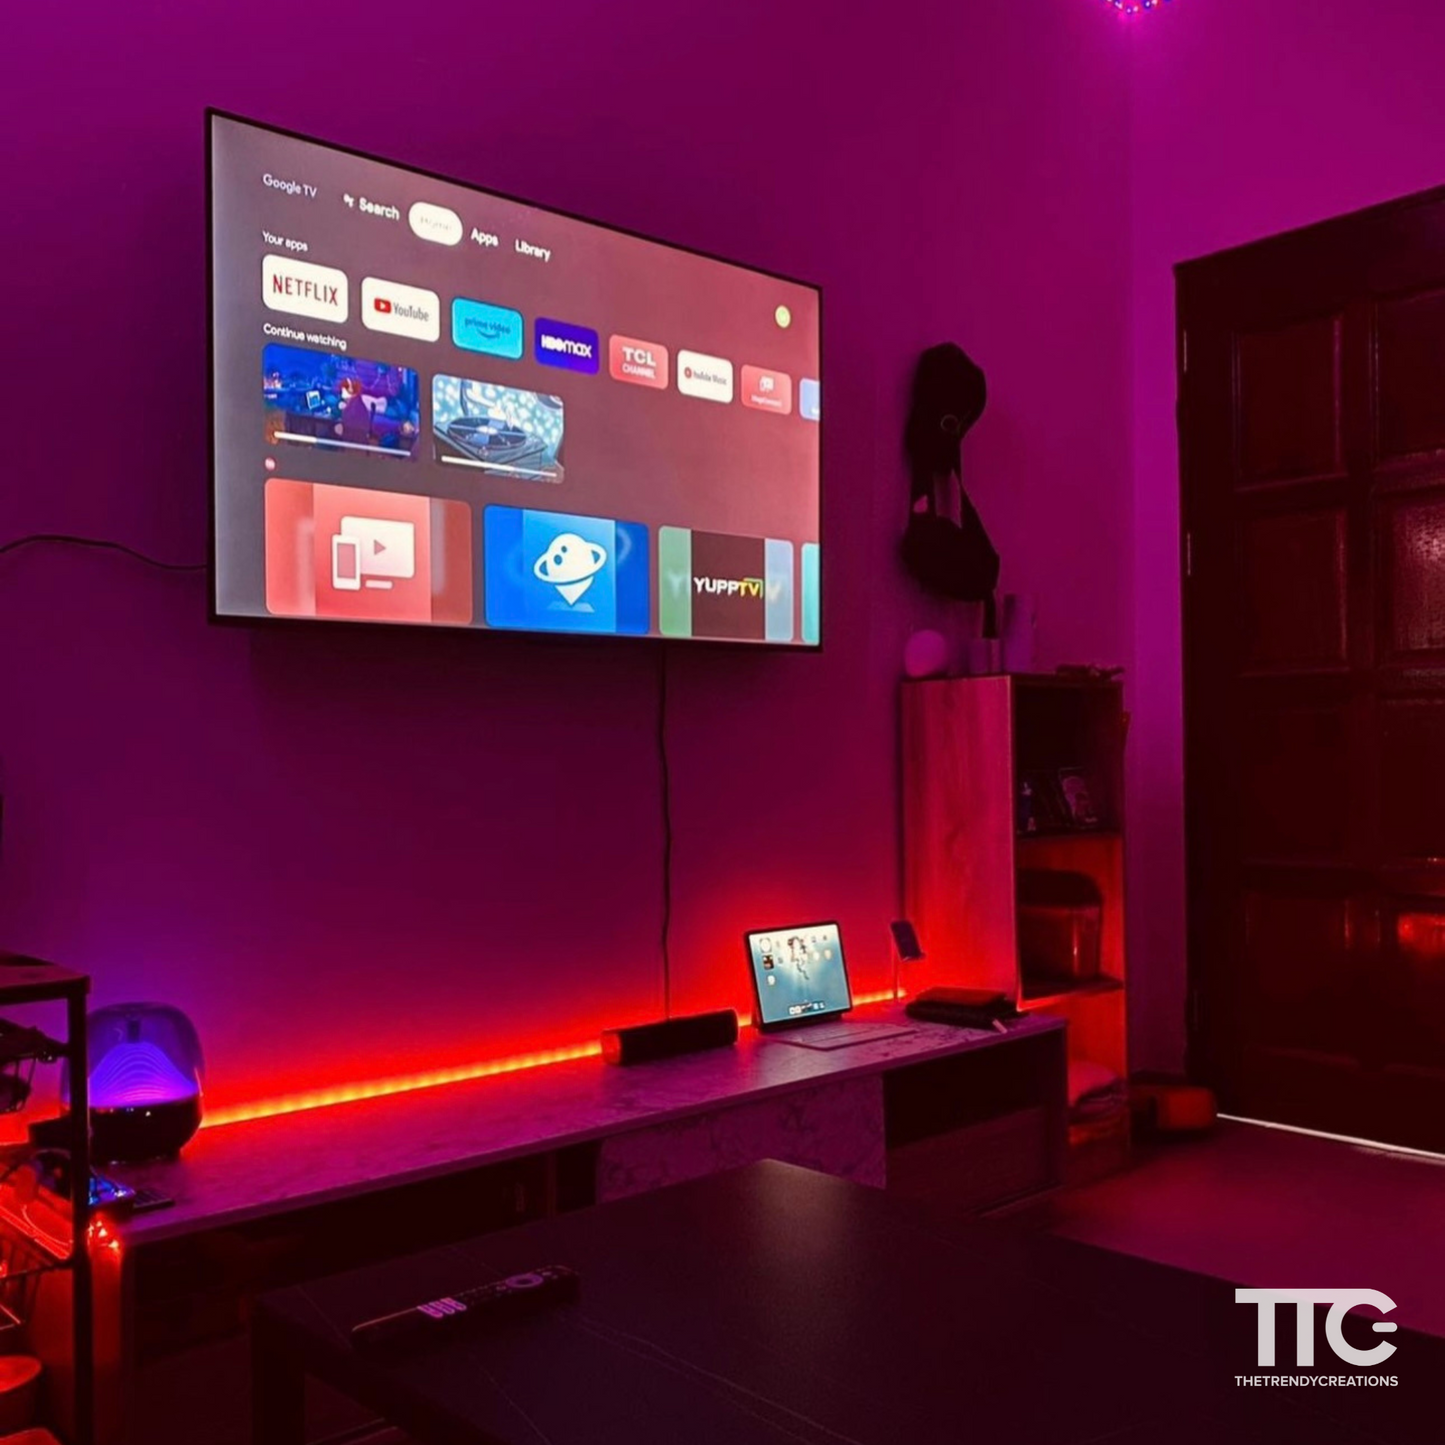 TTC RGB Smart LED Strip Light ™